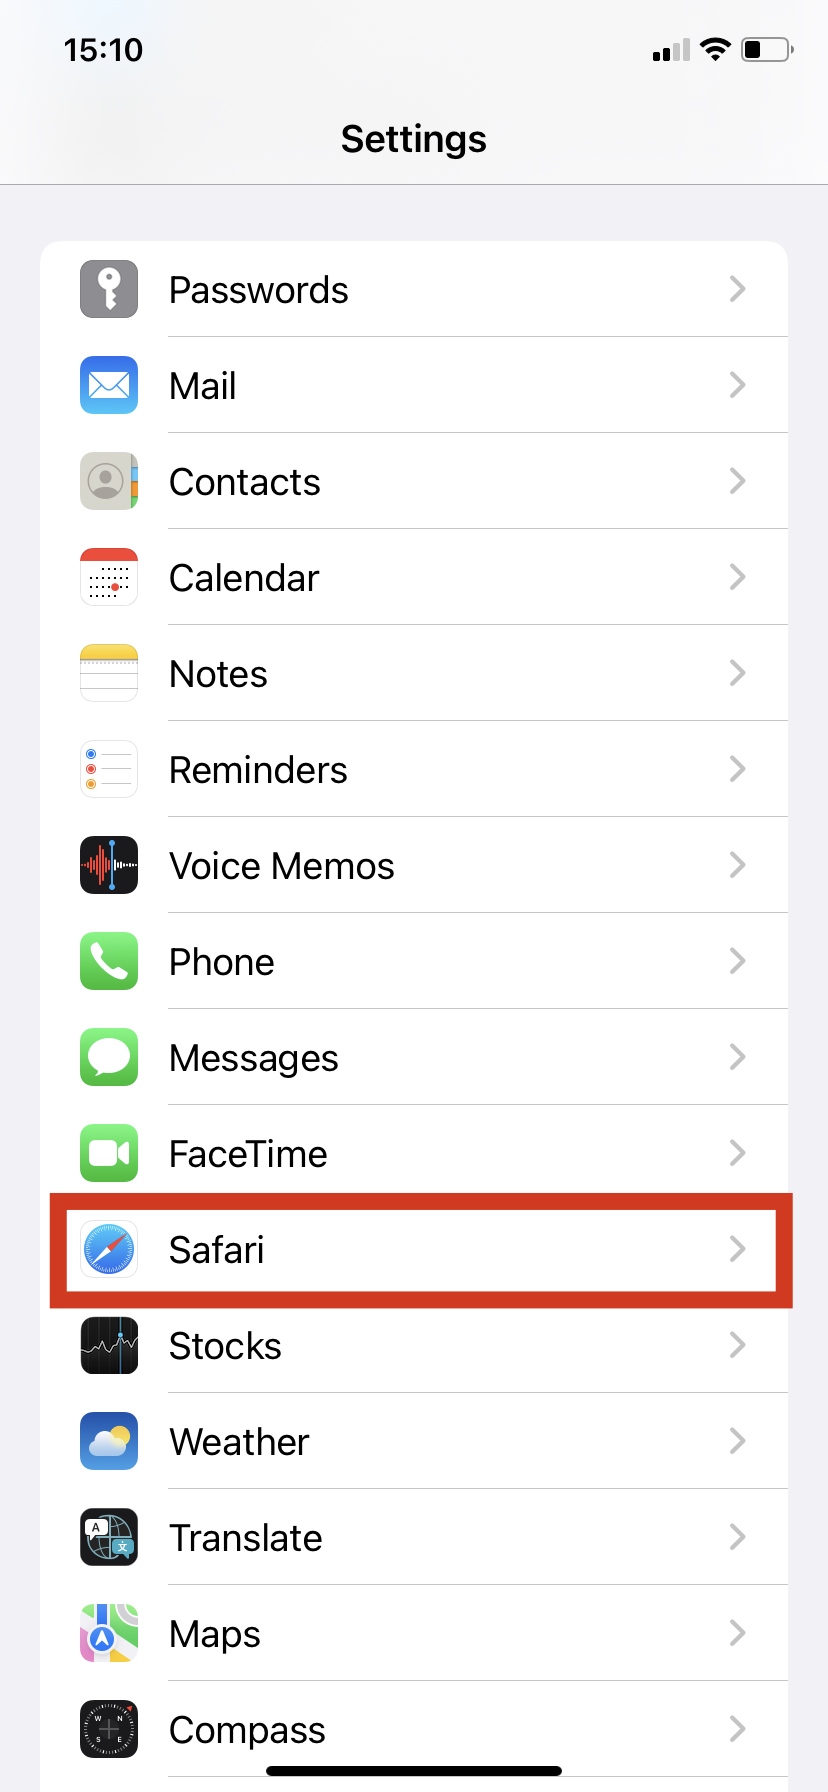 Select "Safari" *mobile_border